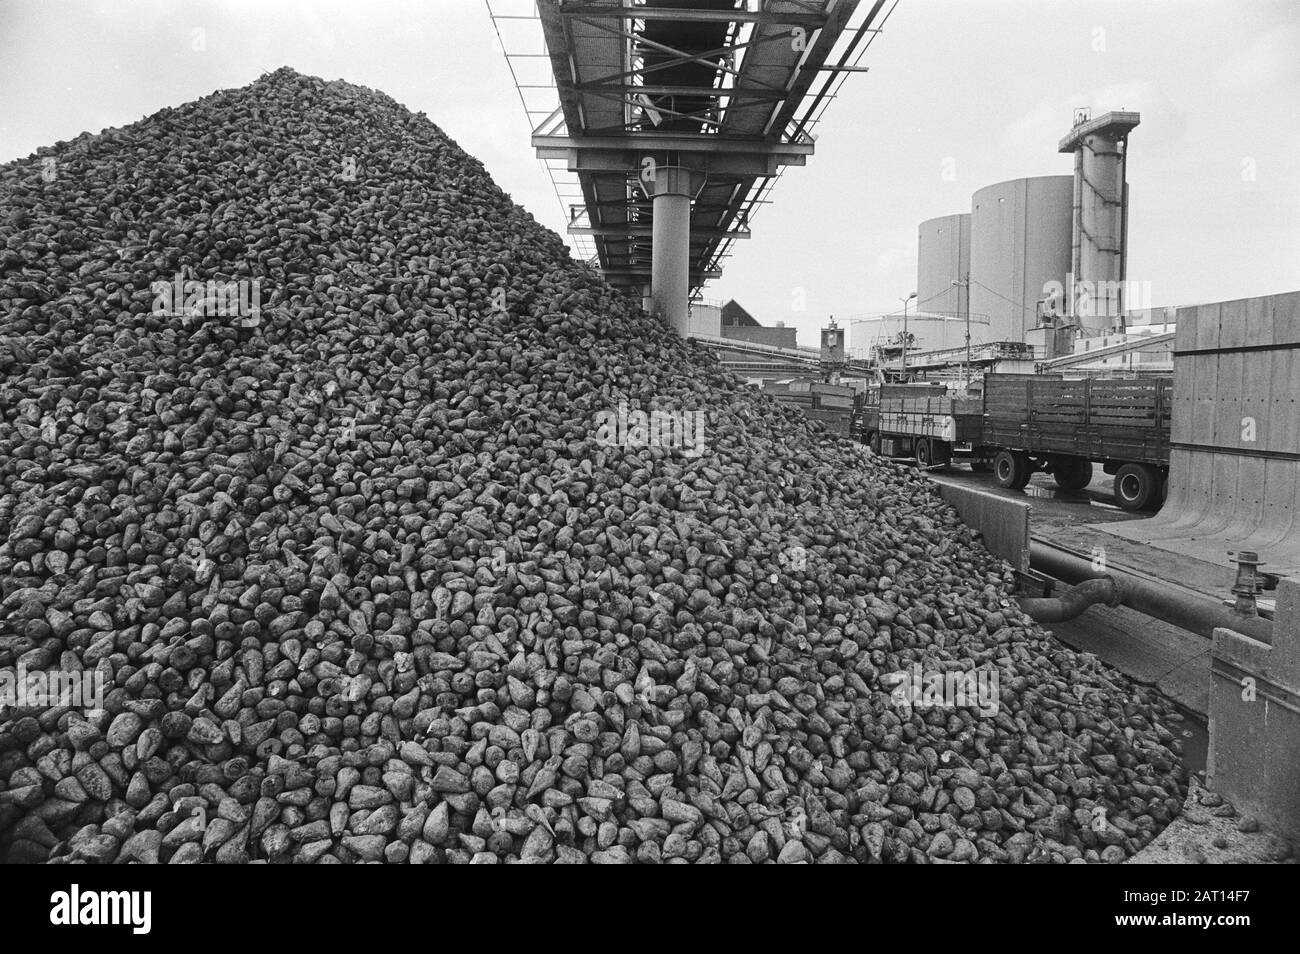 Start of the sugar beet campaign in Halfweg  A truck unloads beet Date: 25 september 1979 Location: Halfweg, Noord-Holland Keywords: Infotrucks, factories, sugar beet Stock Photo